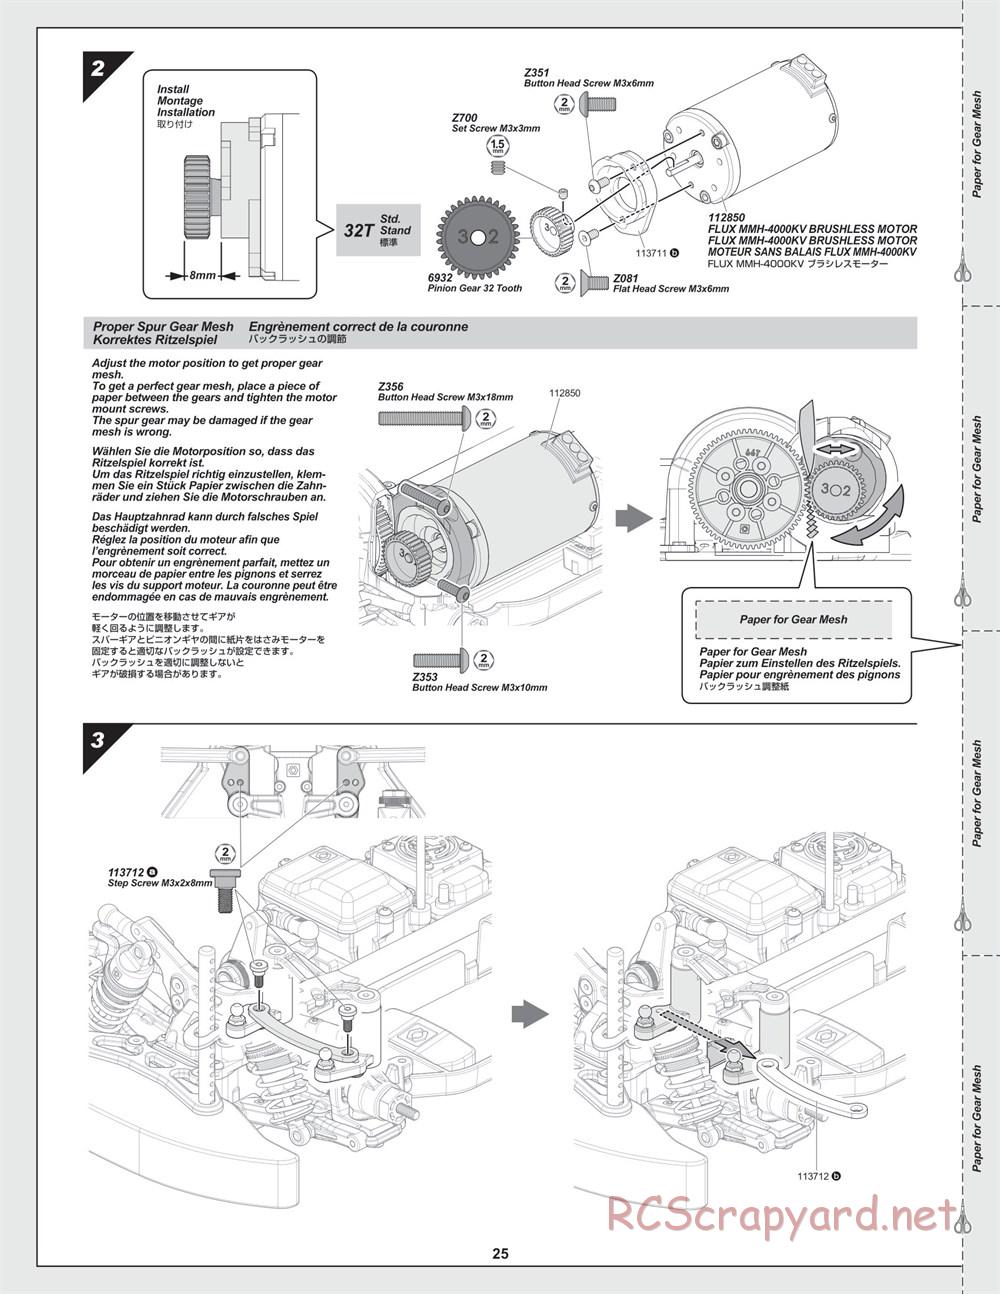 HPI - RS4 Sport 3 Flux - Manual - Page 25